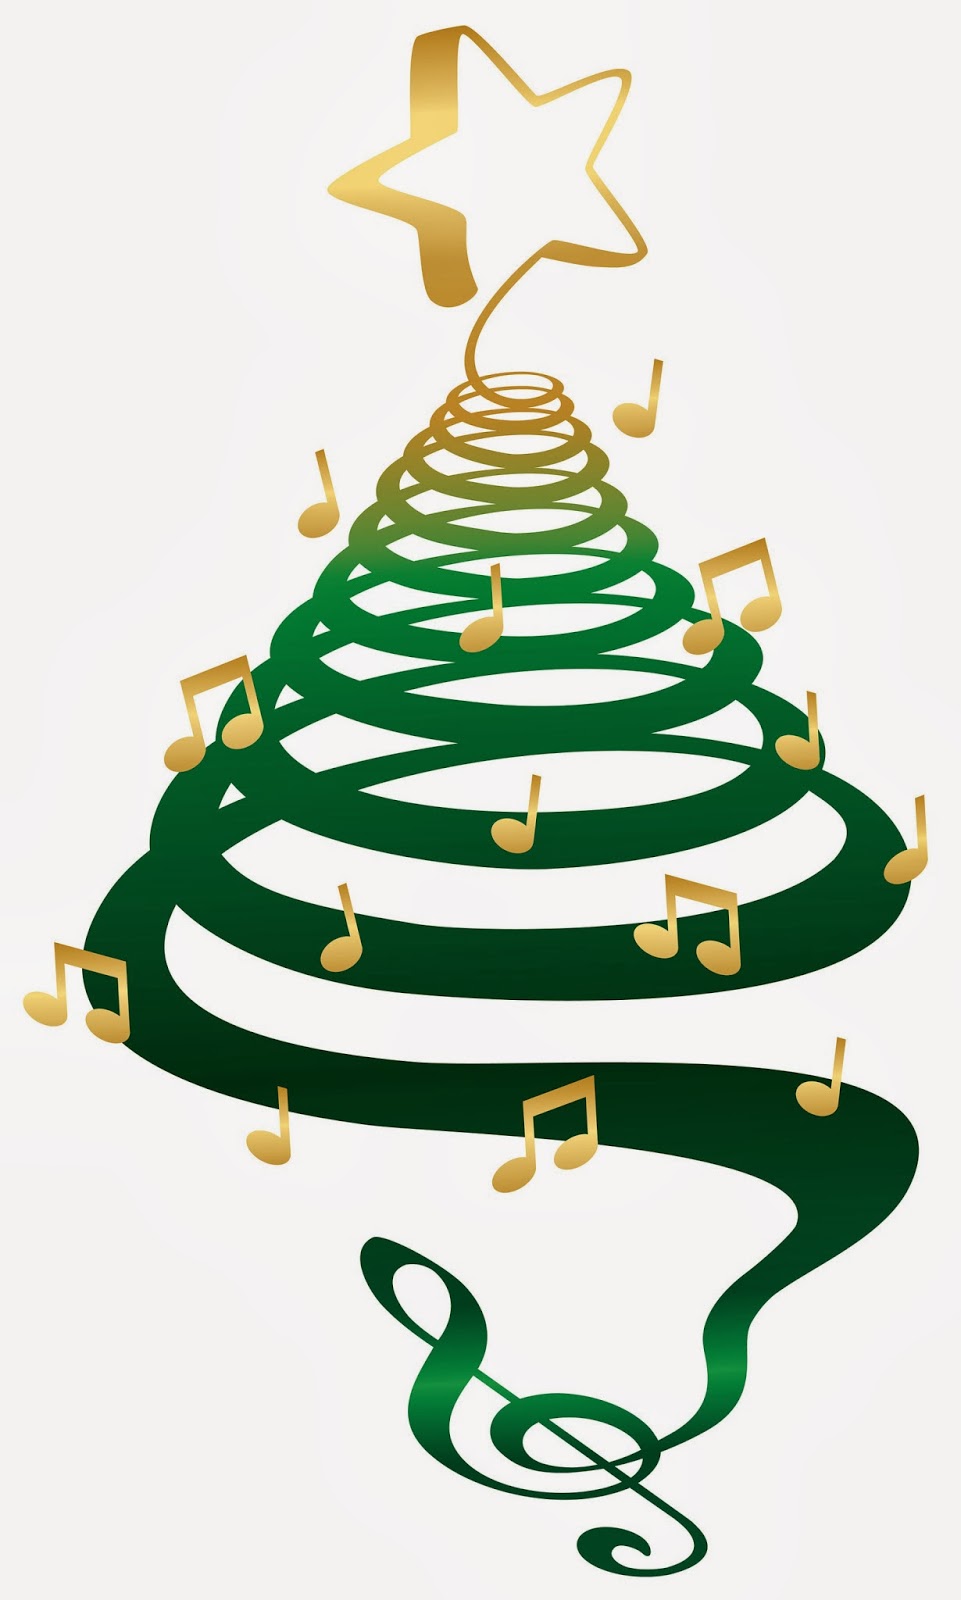 Concert Christmas Singersclipart Clipart